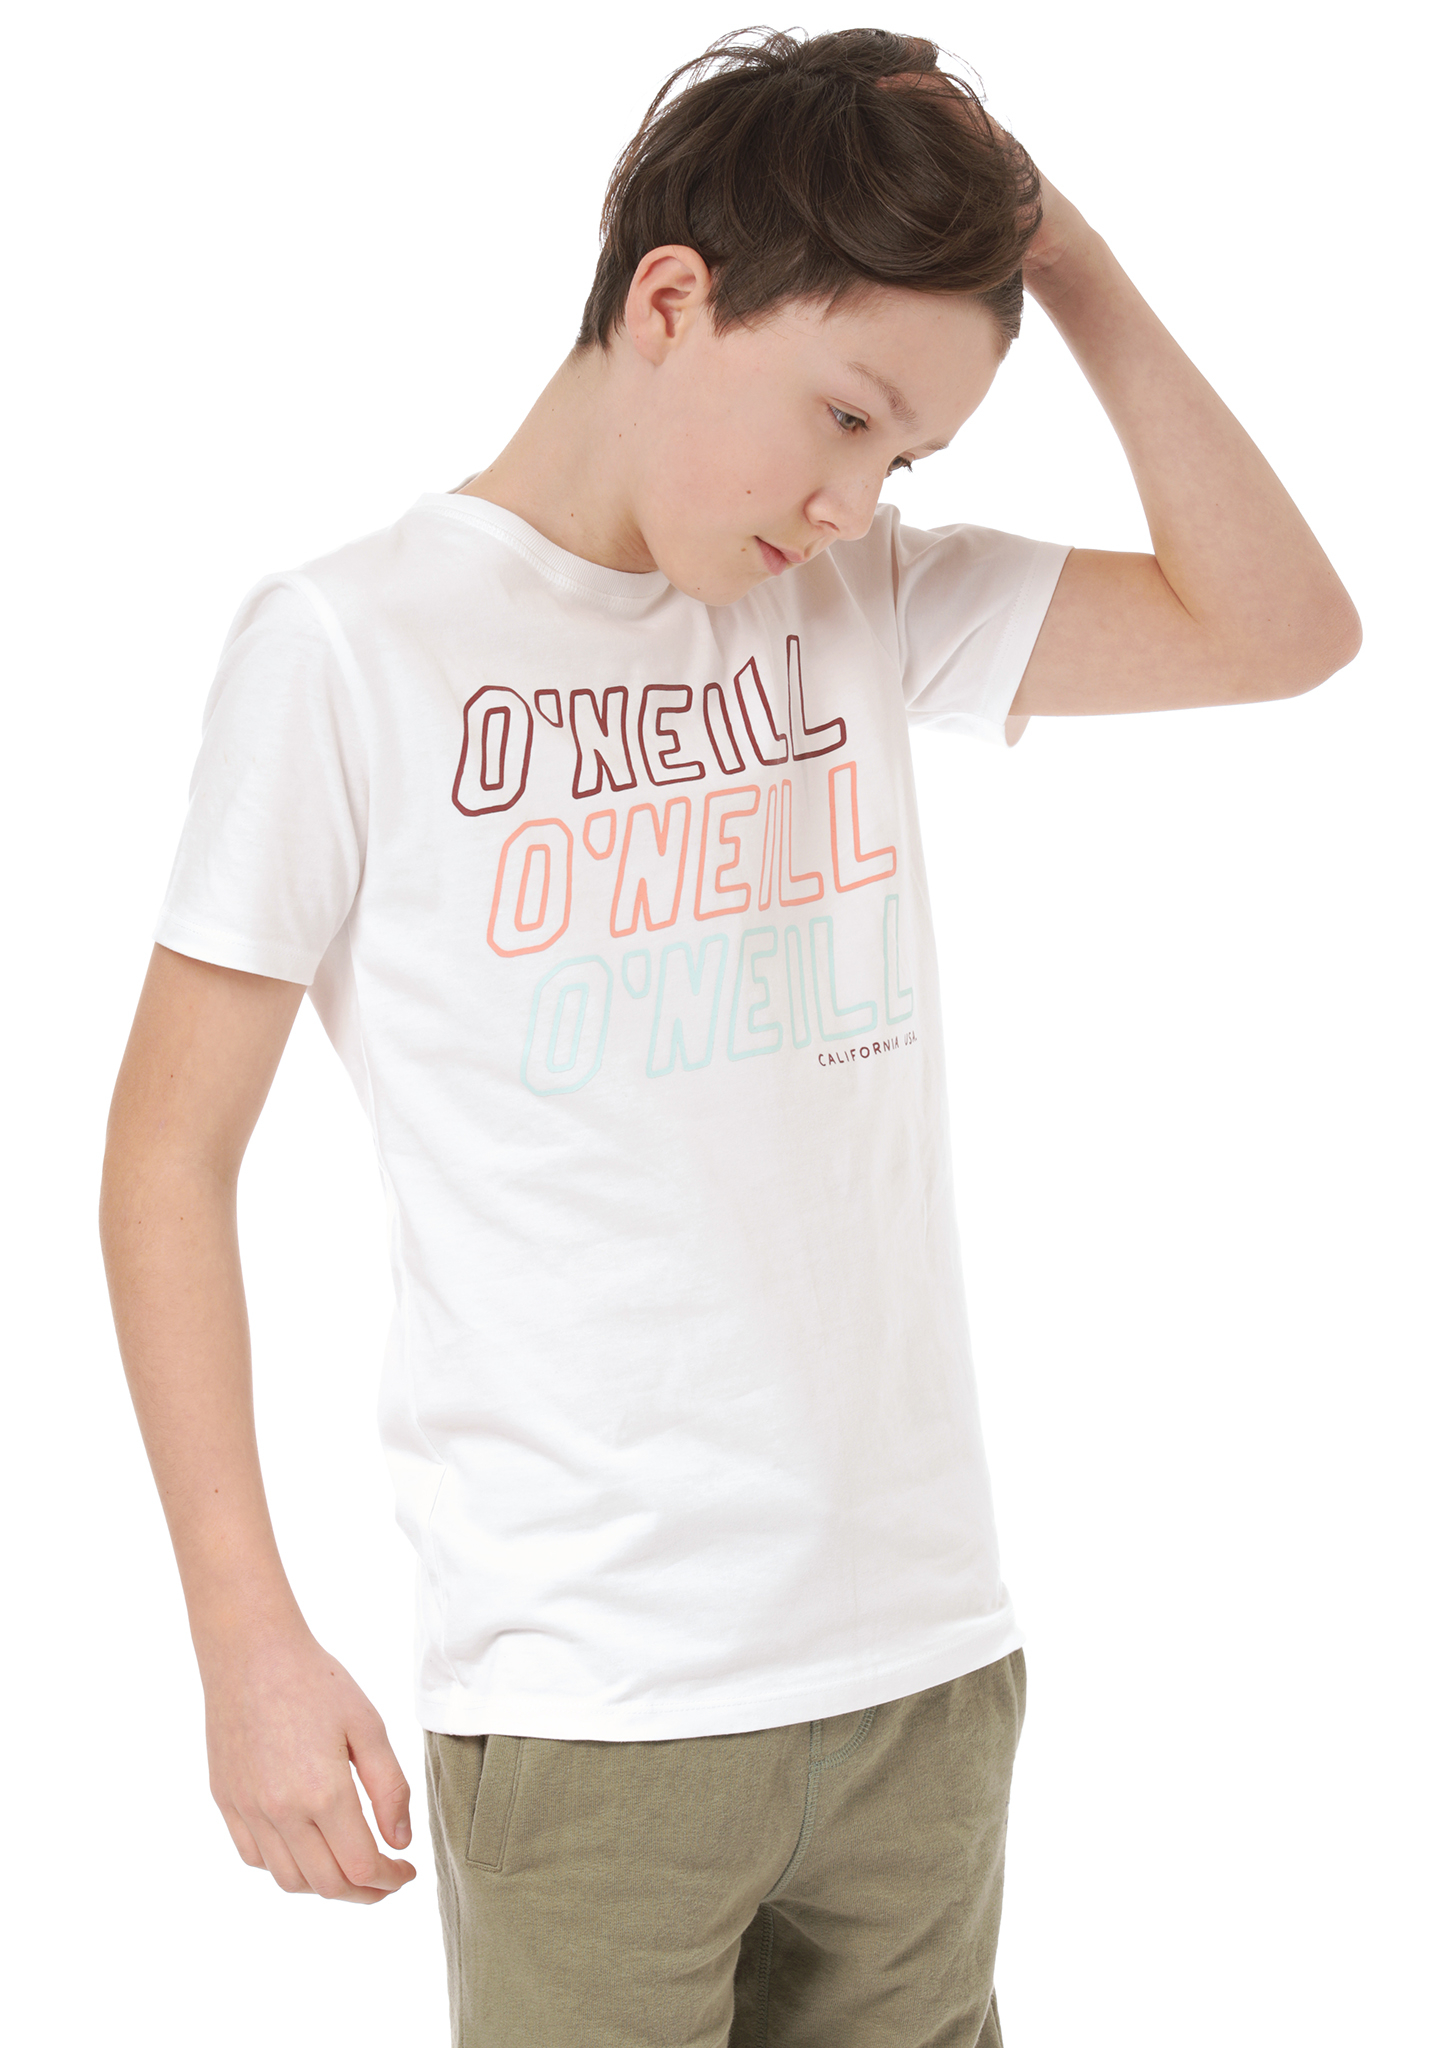 O'Neill All Year T-Shirts powder white 116